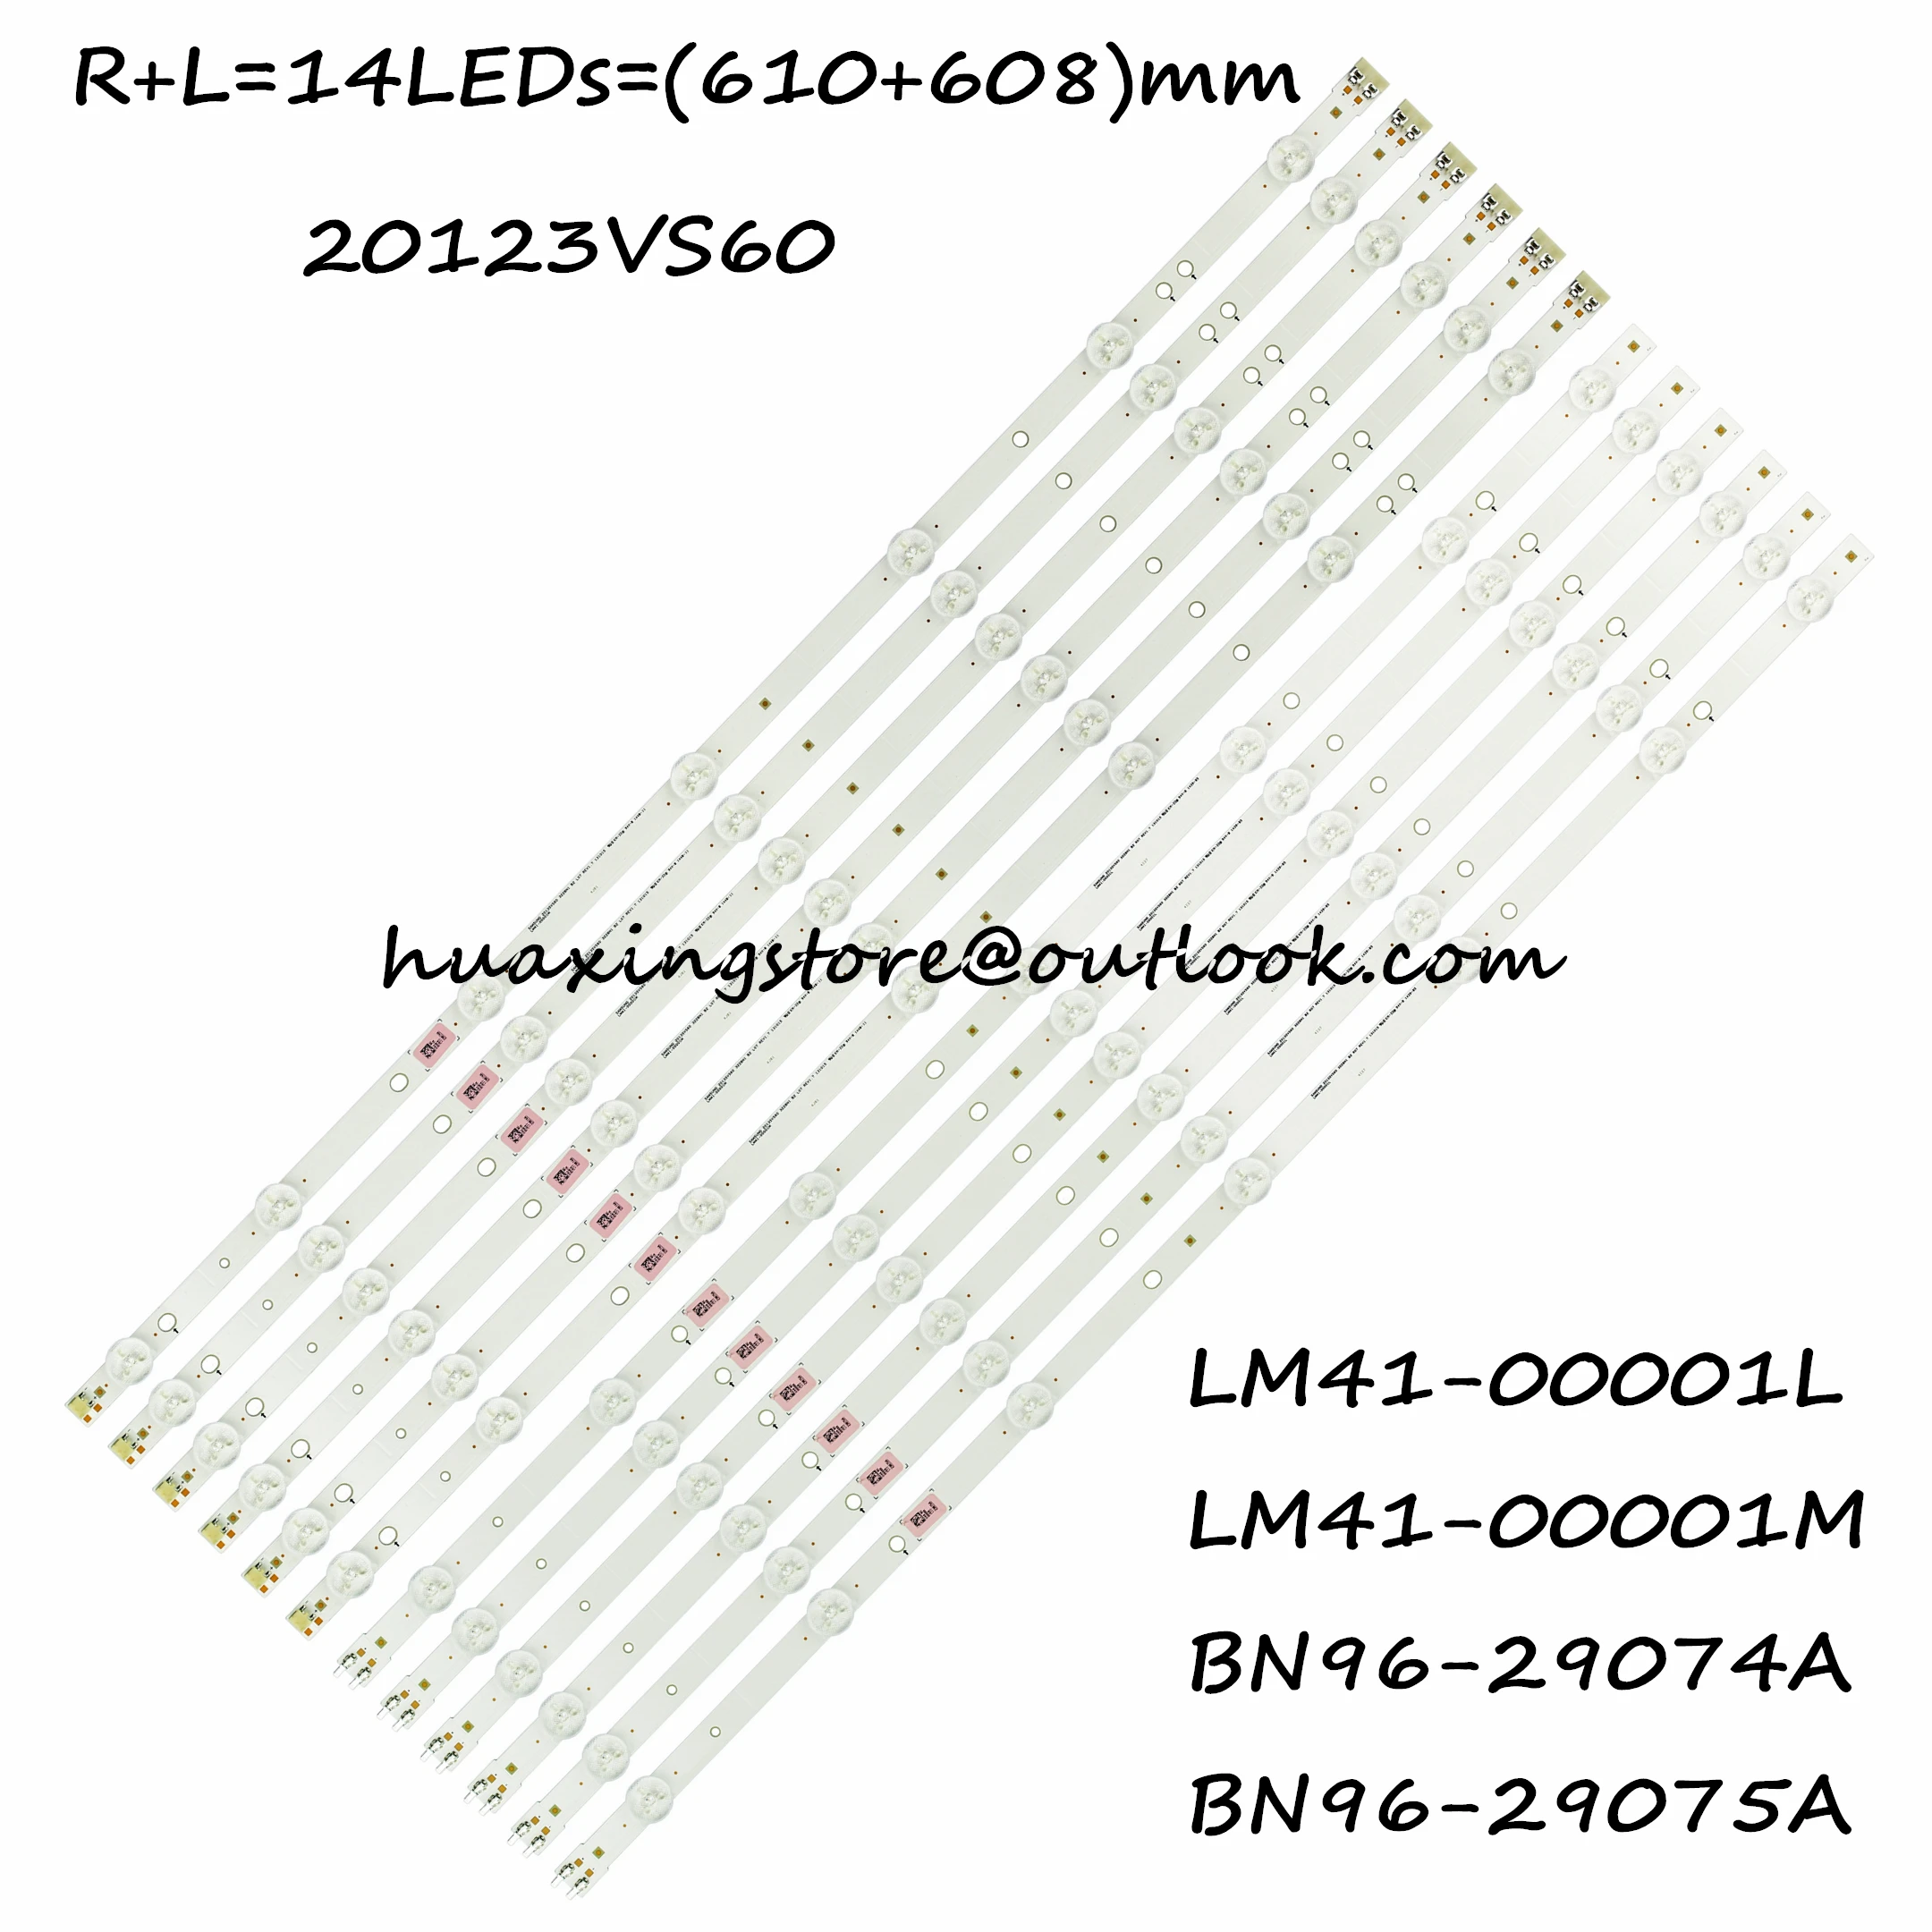 

LED Backlight strip(12)for Samsung UE60H6203 UN60FH6003 UN60J6200 2013SVS60 3228N1 D3GE-600SMA-R2 600SMB-R1 BN96-29074A 29075A